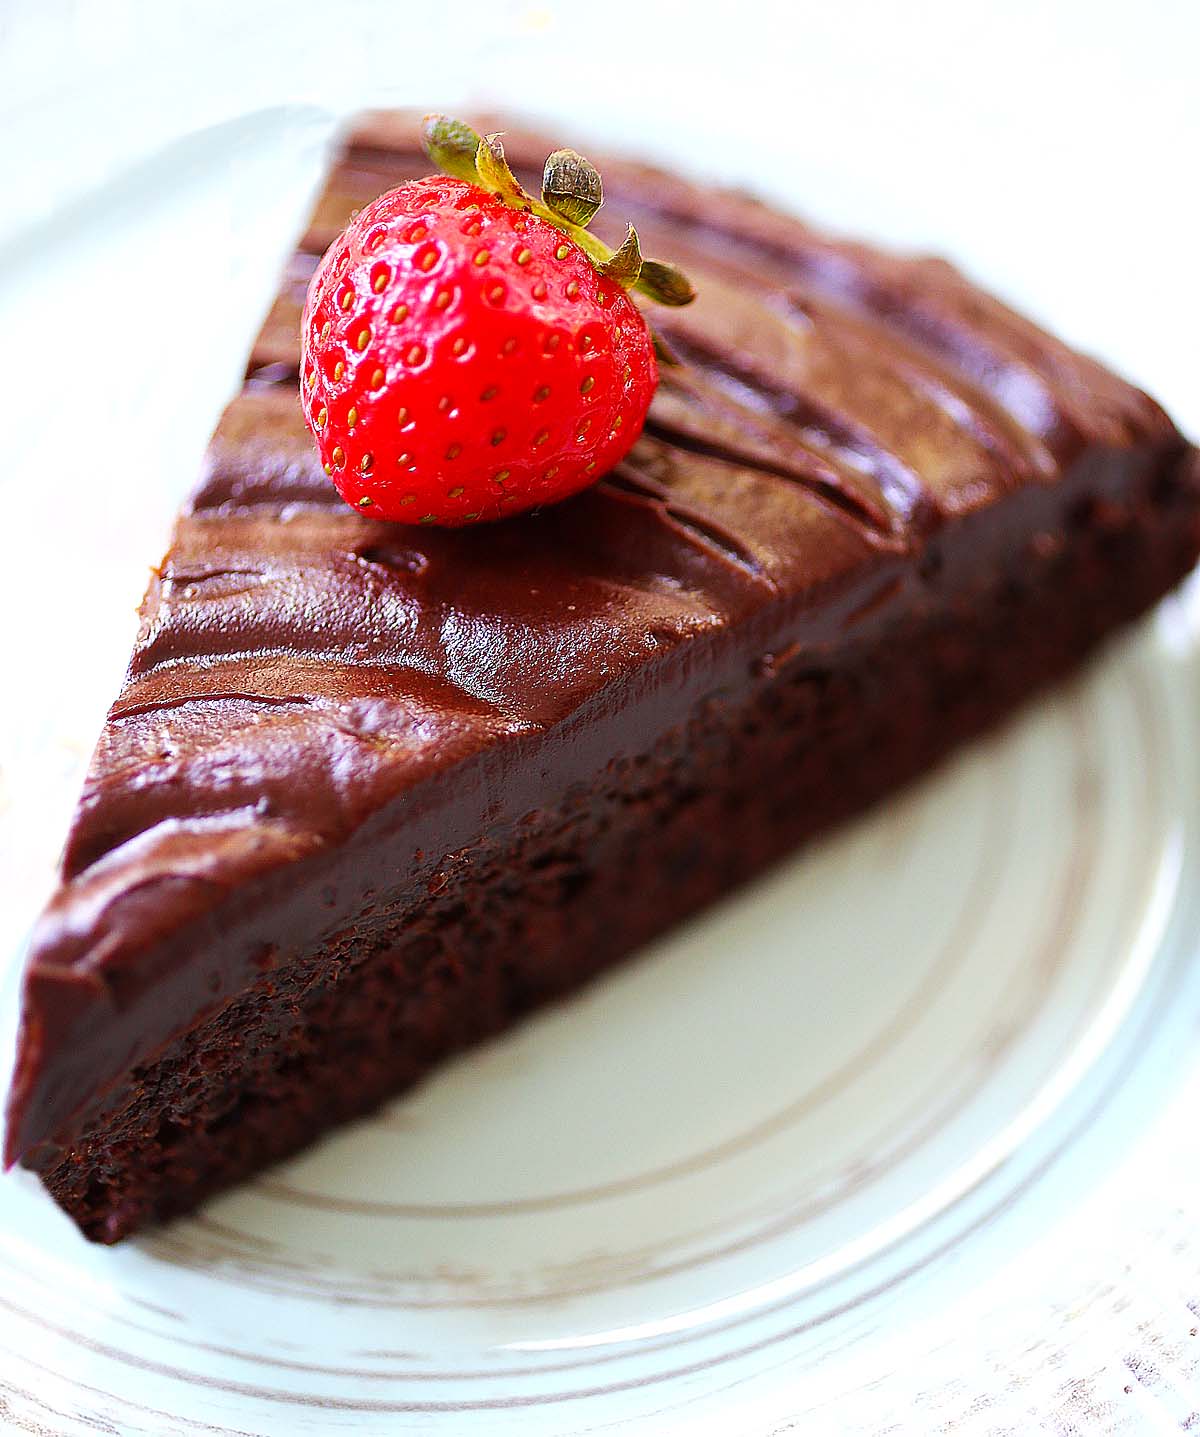 Epic Chocolate Cake